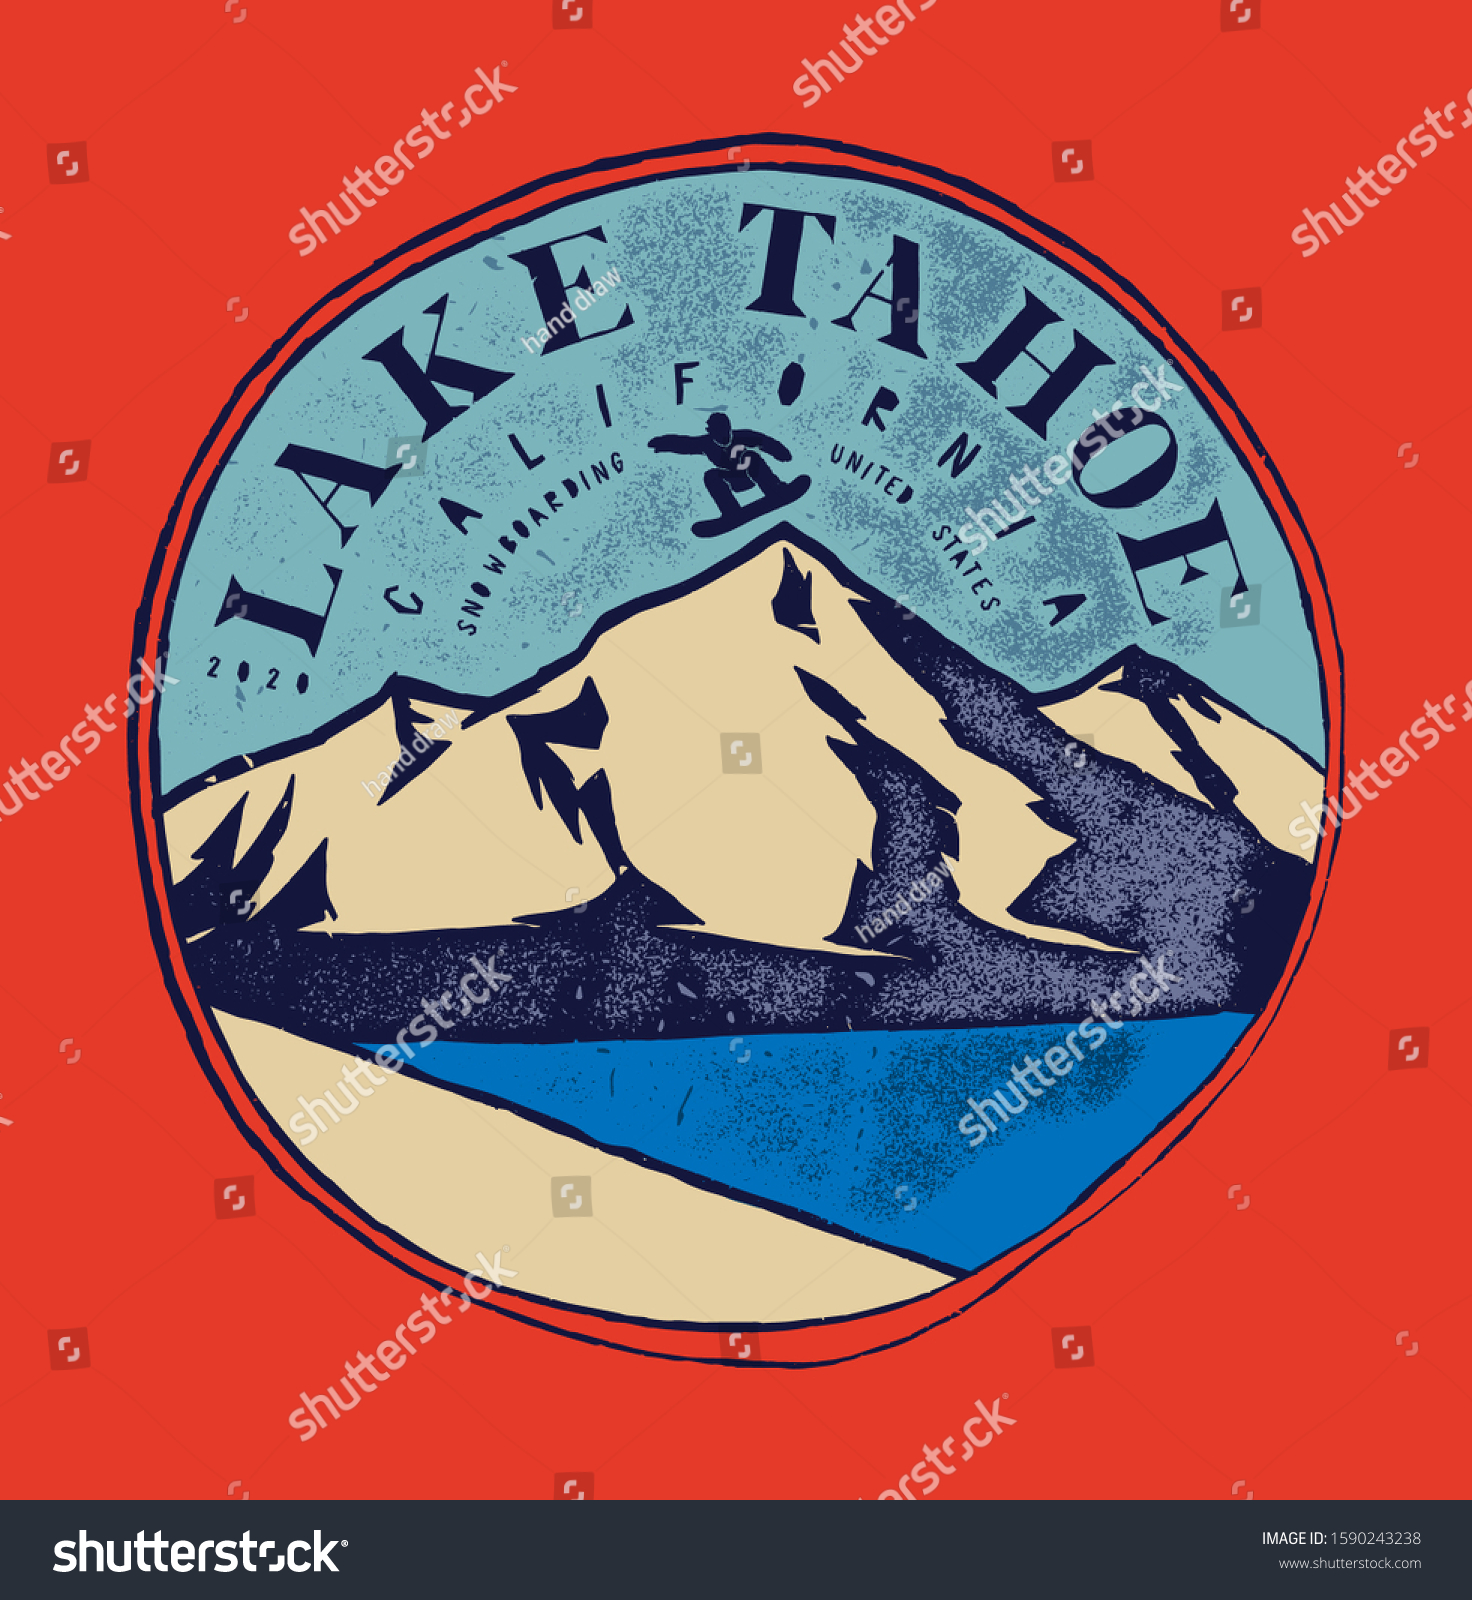 SVG of Lake tahoe ski resort vintage label witha snowboarder jumping over the mountain. svg